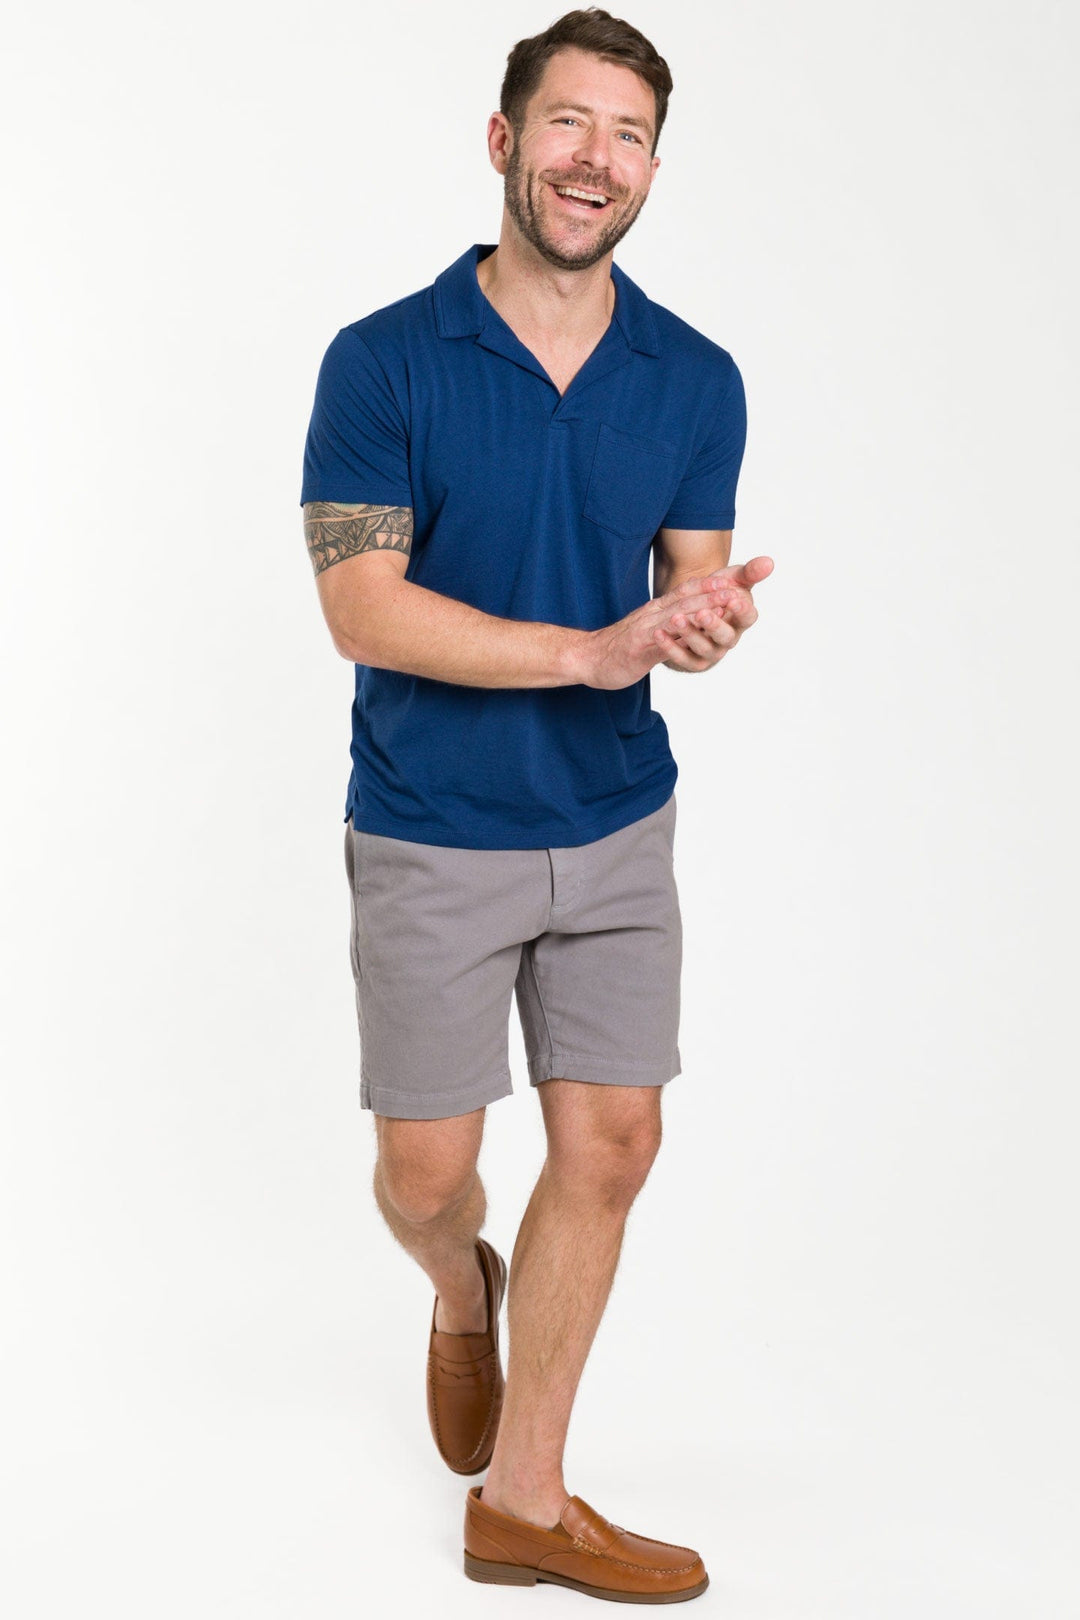 Buy Navy T-Shirt Polo for Short Men | Ash & Erie   T-Shirt Polo